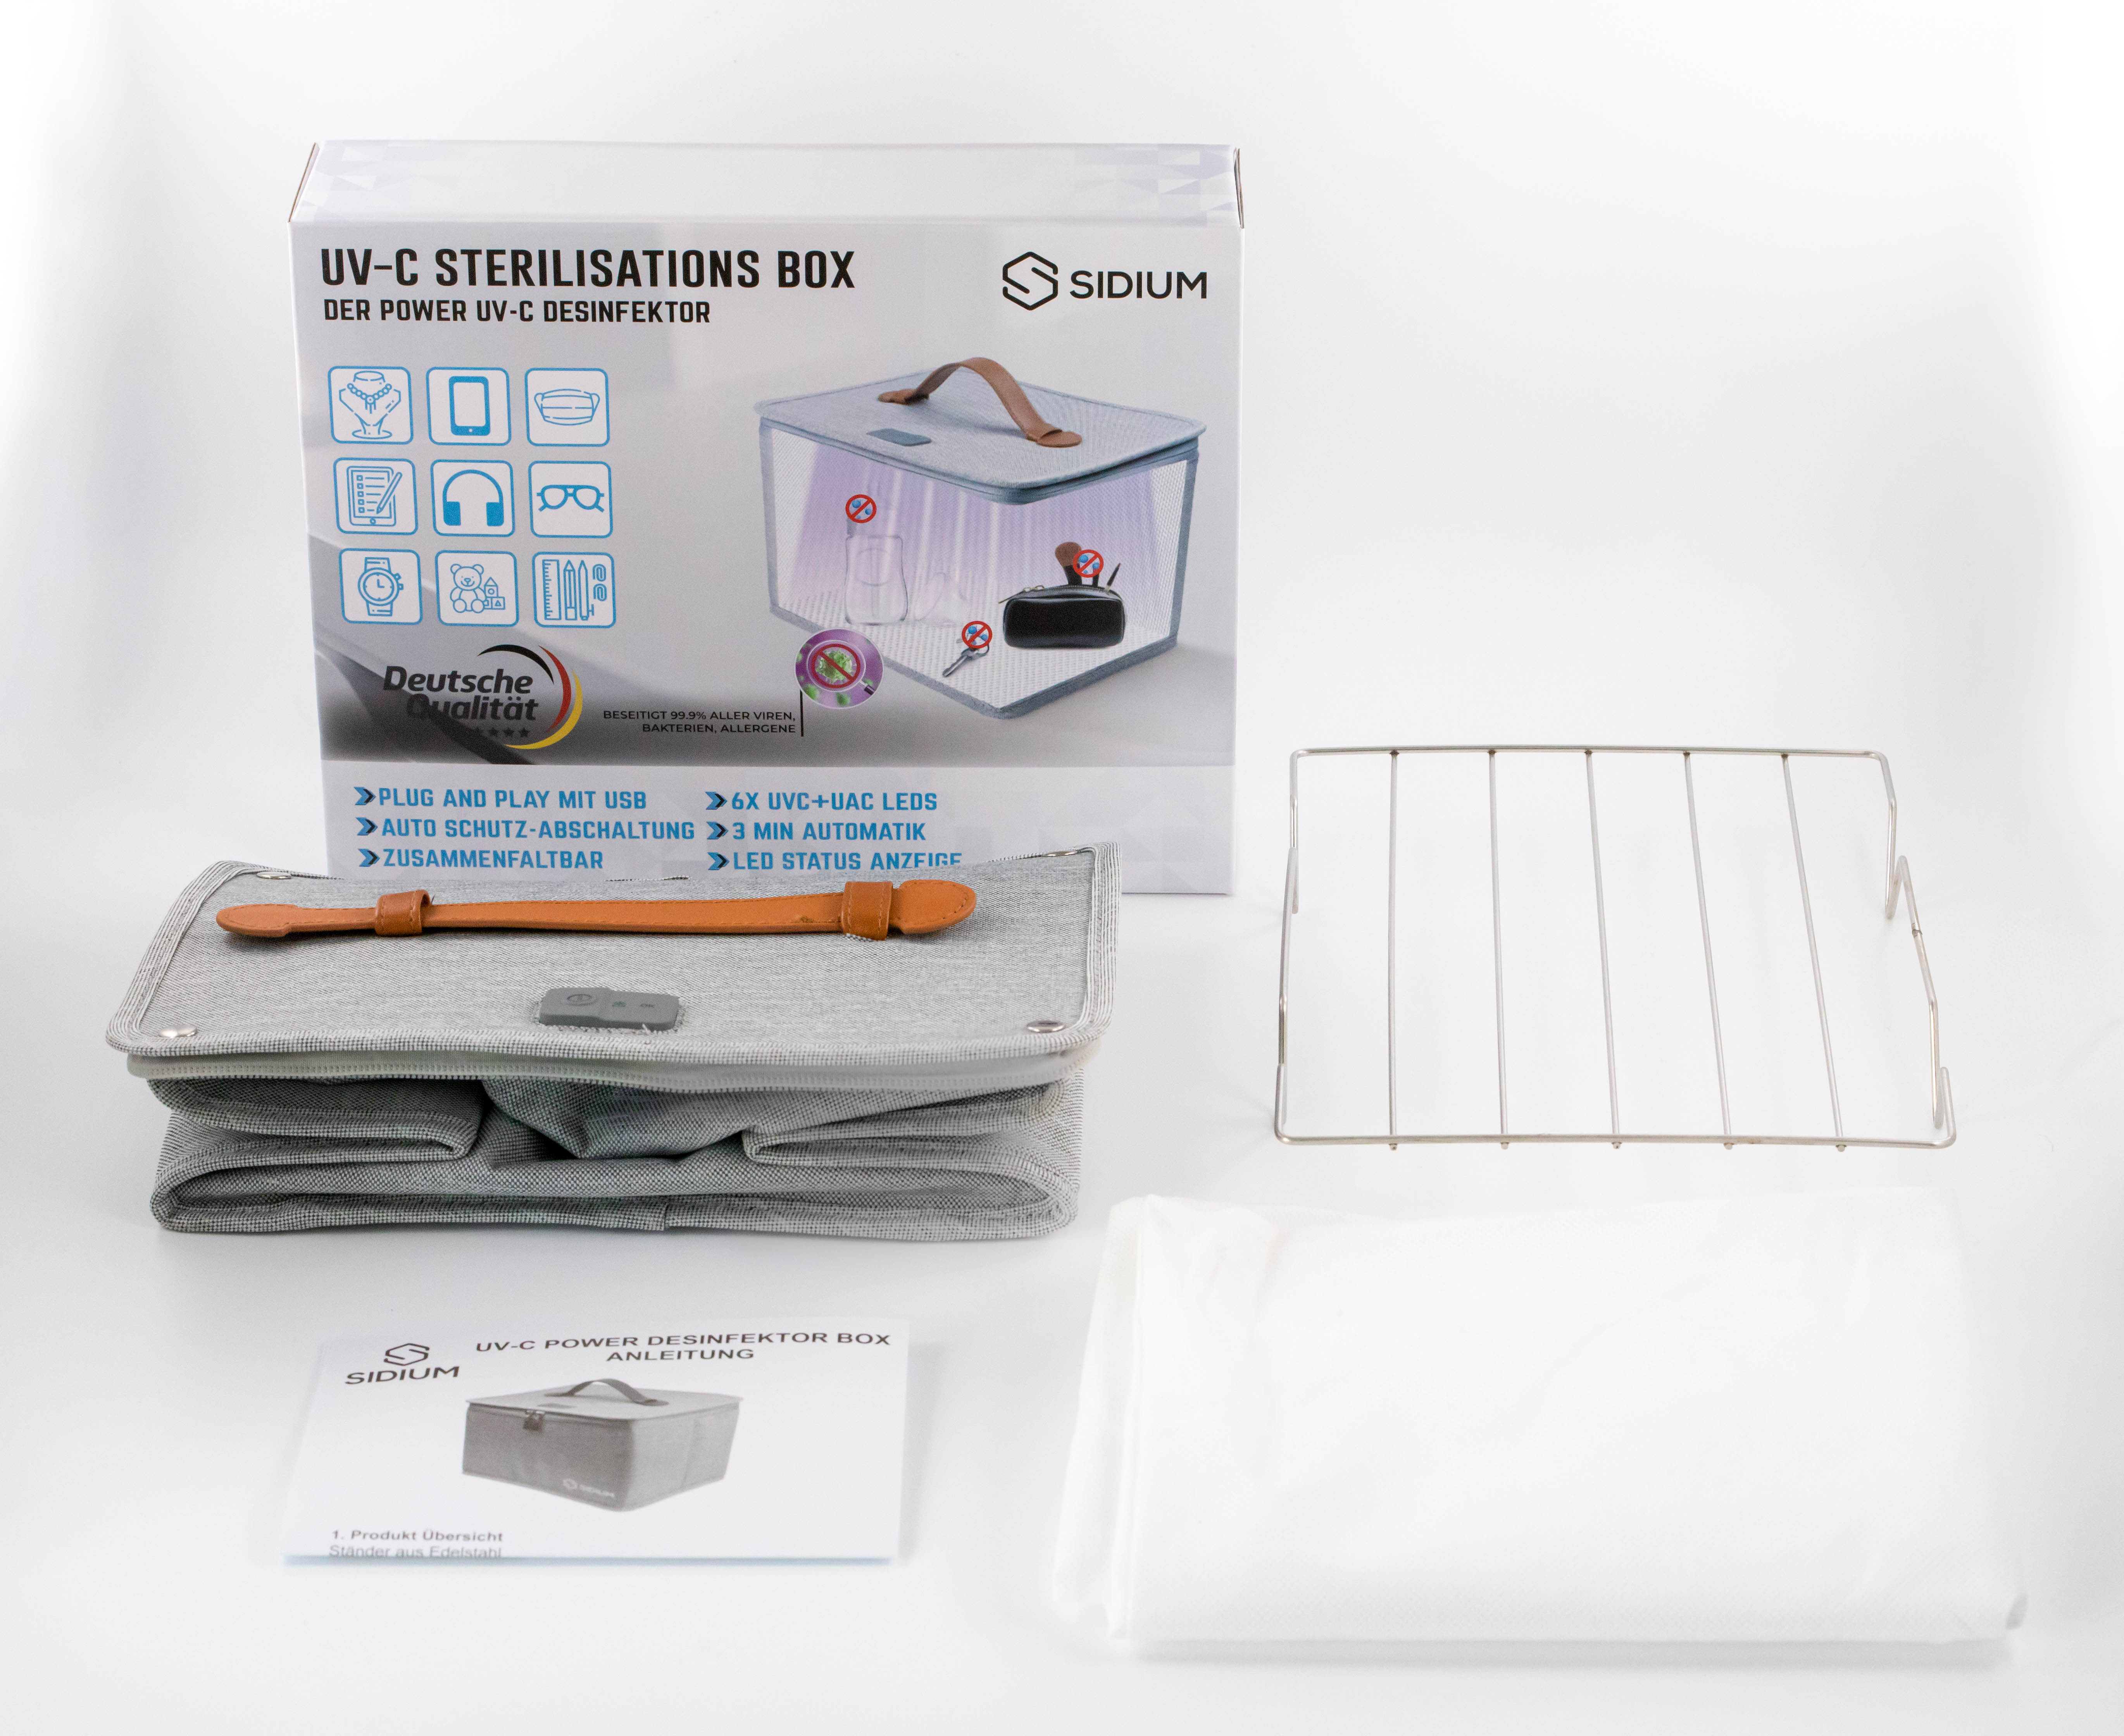 SIDIUM POWER UV-C DESINFEKTOR Sterilisator BOX